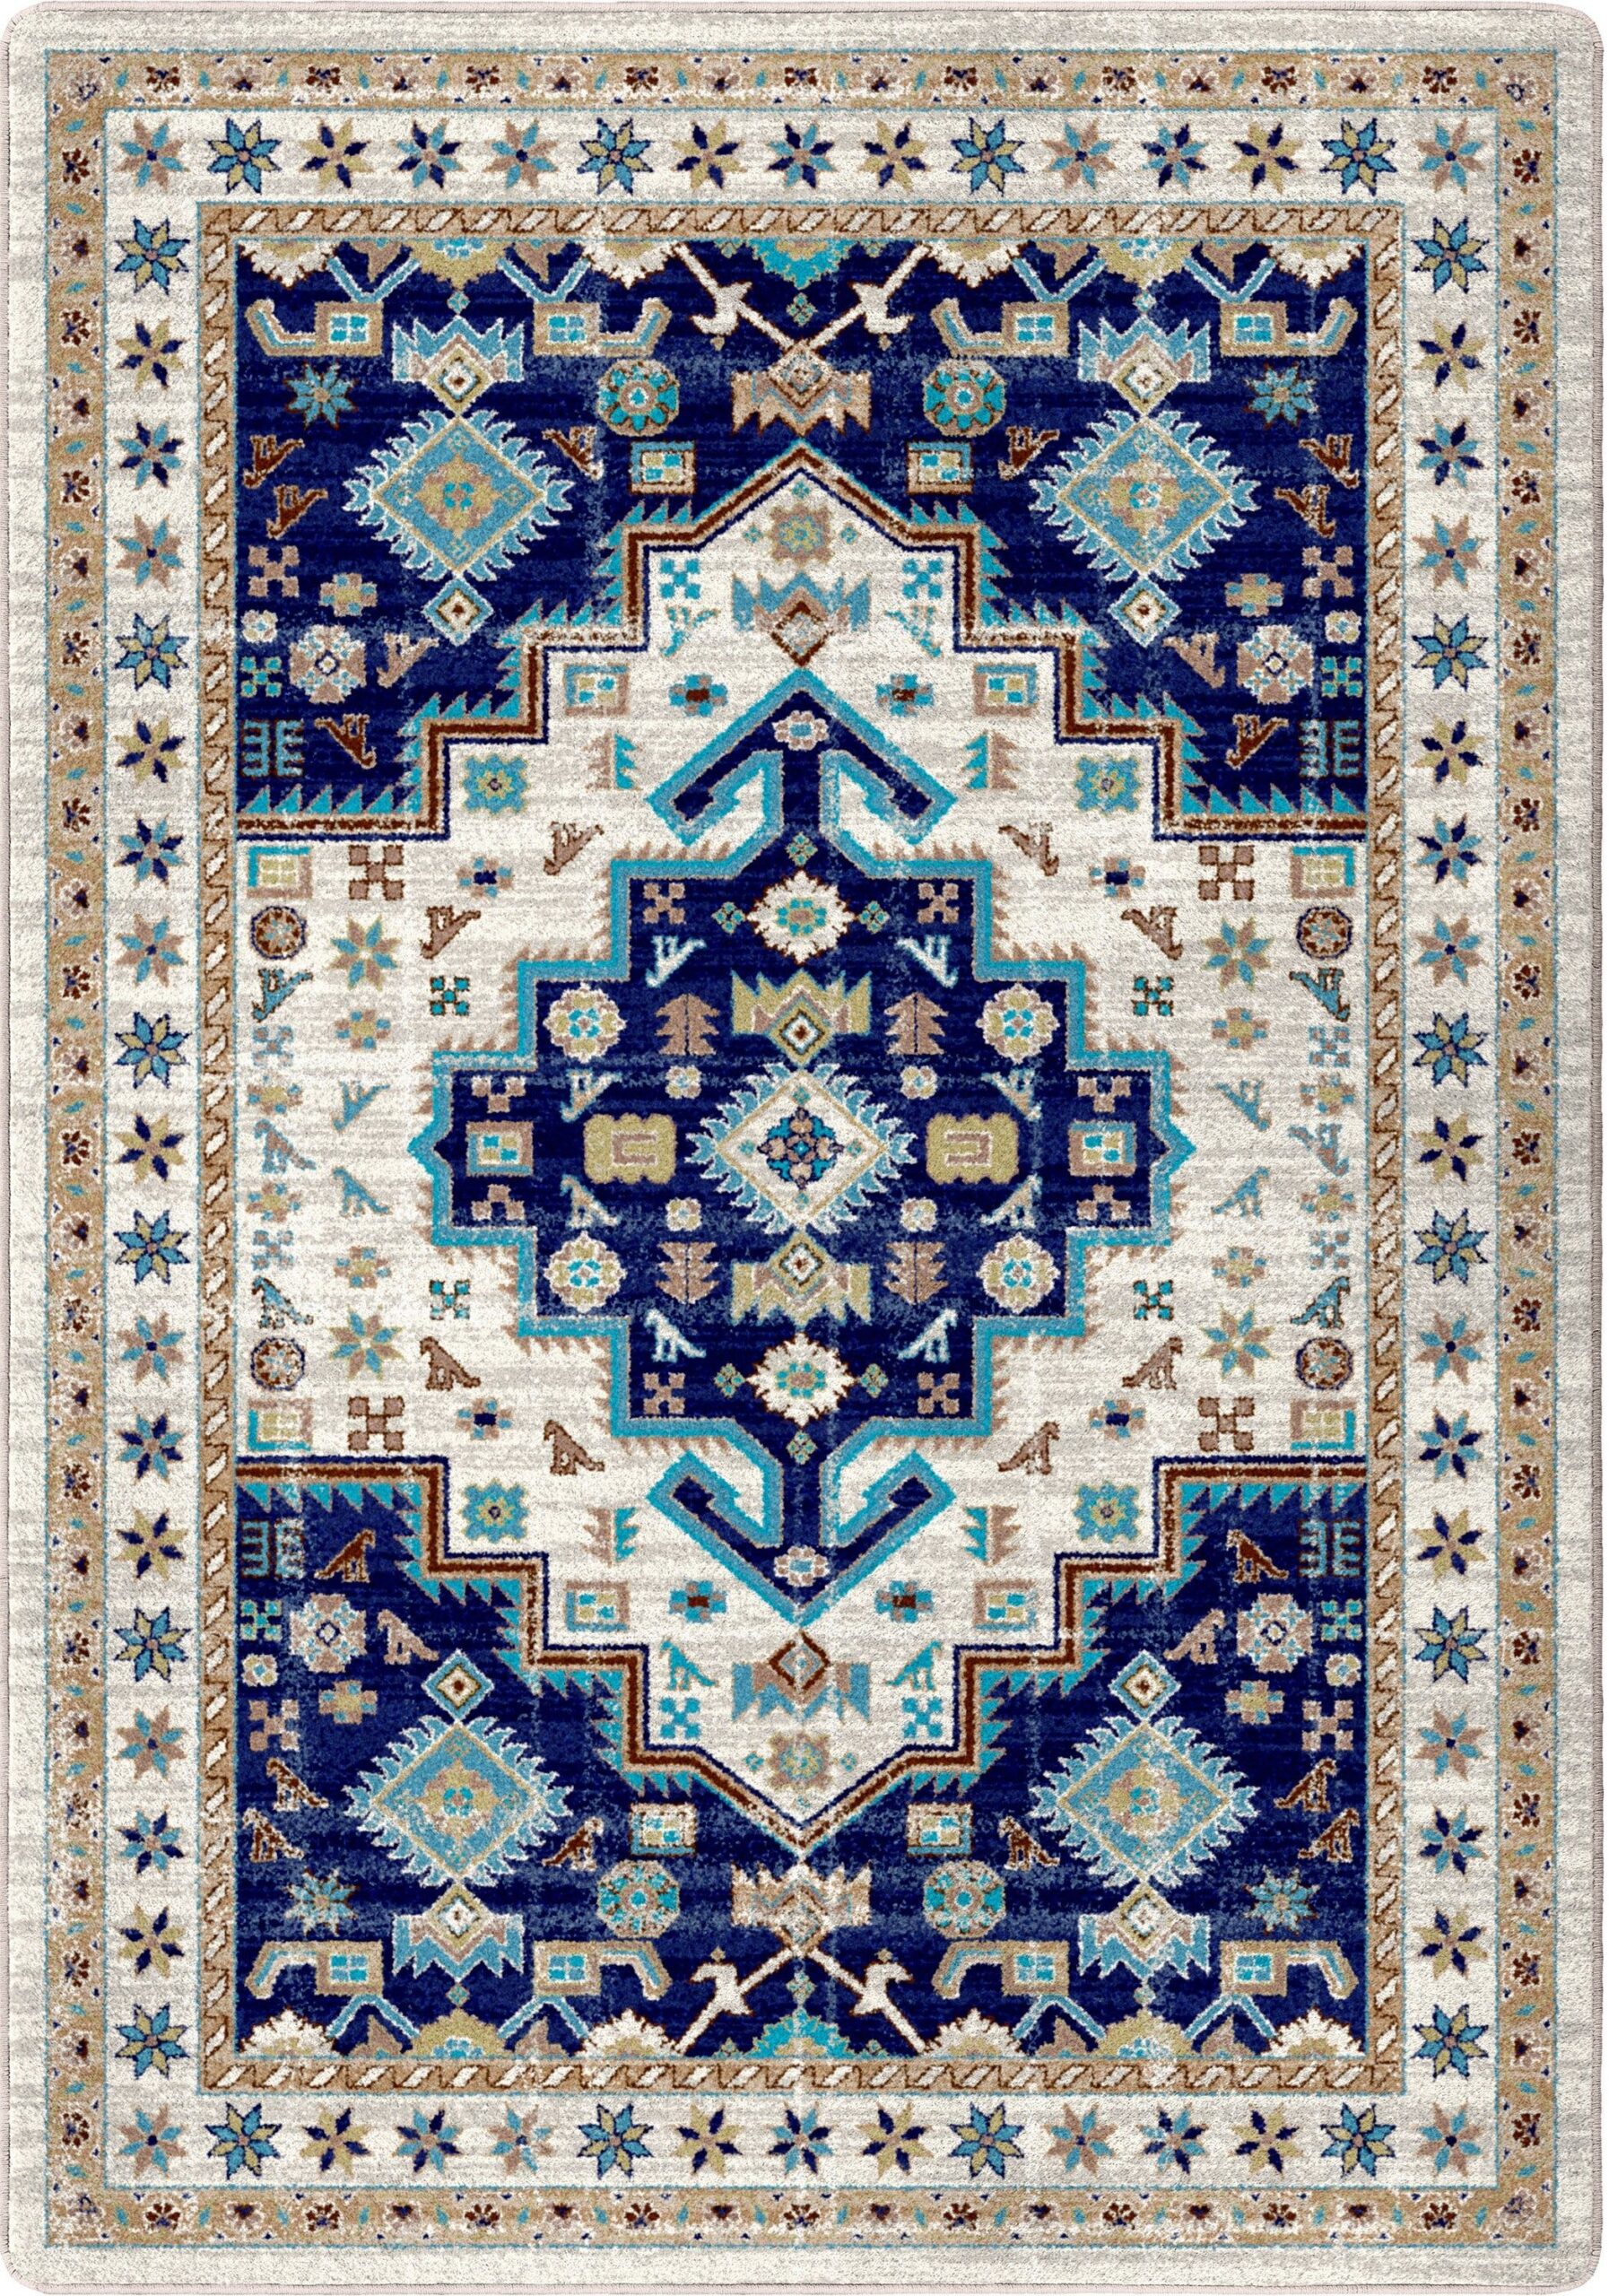 Considering turkish rugs